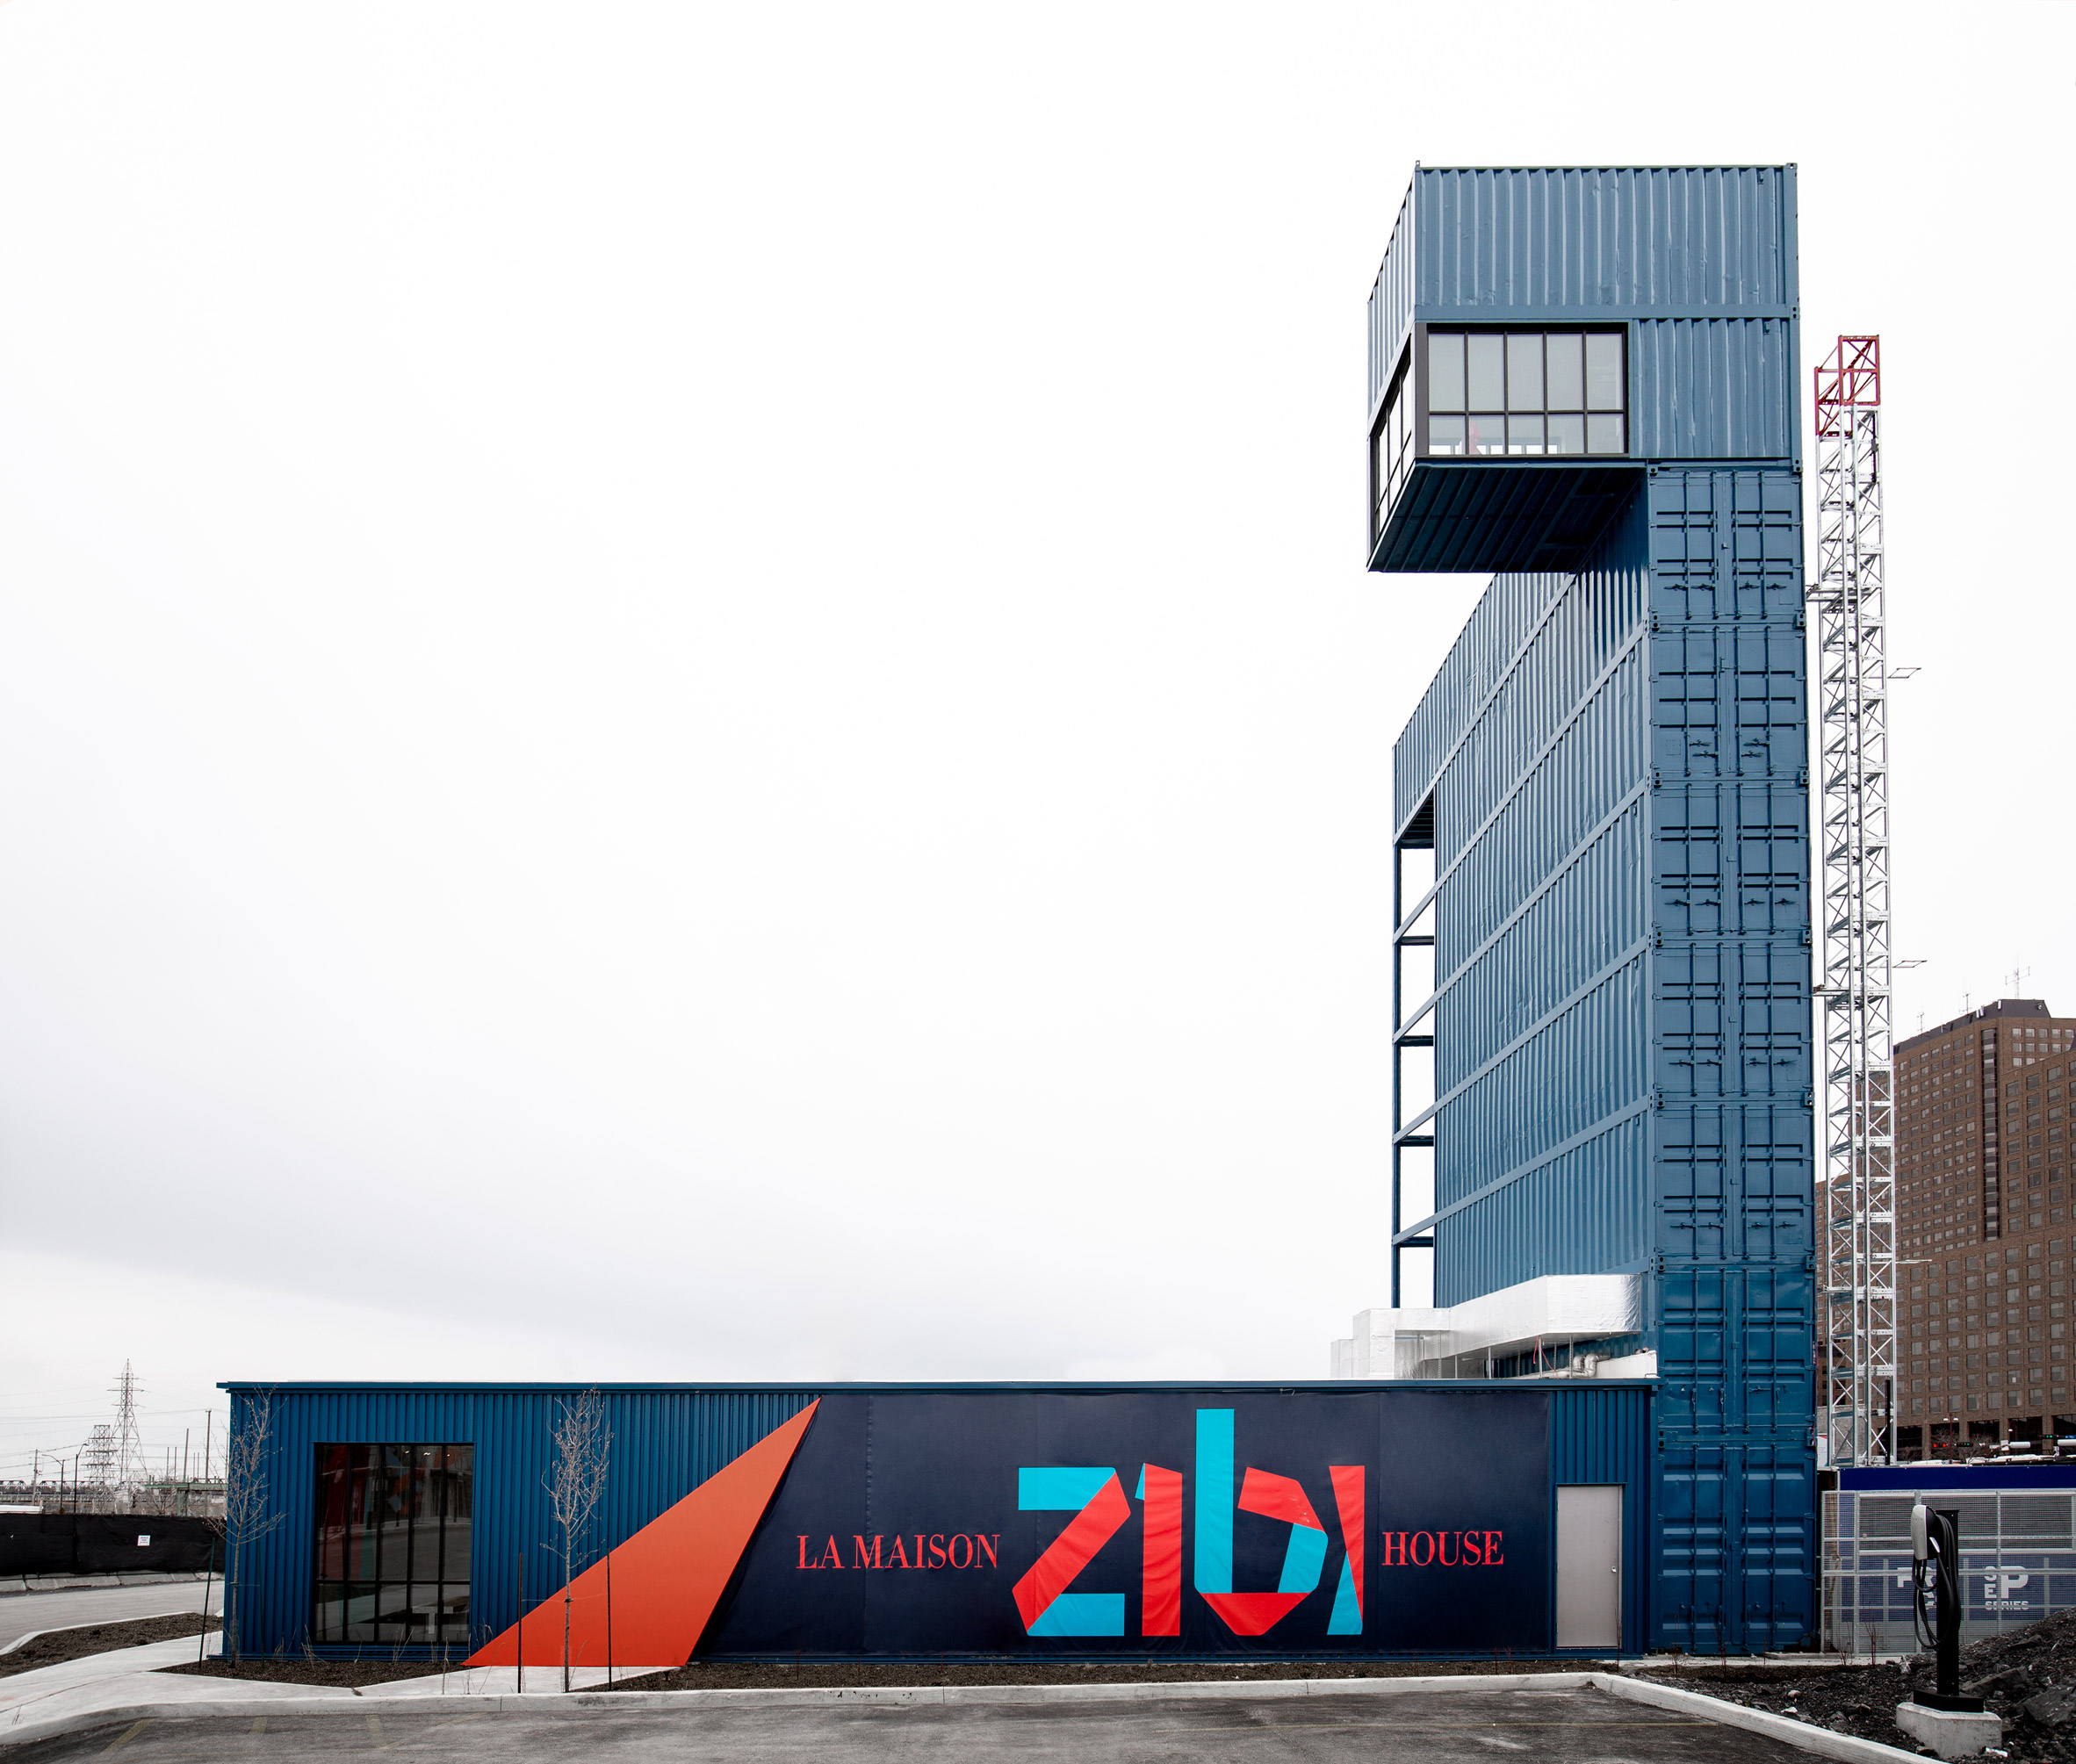 Zibi House by Paulo Ferrari